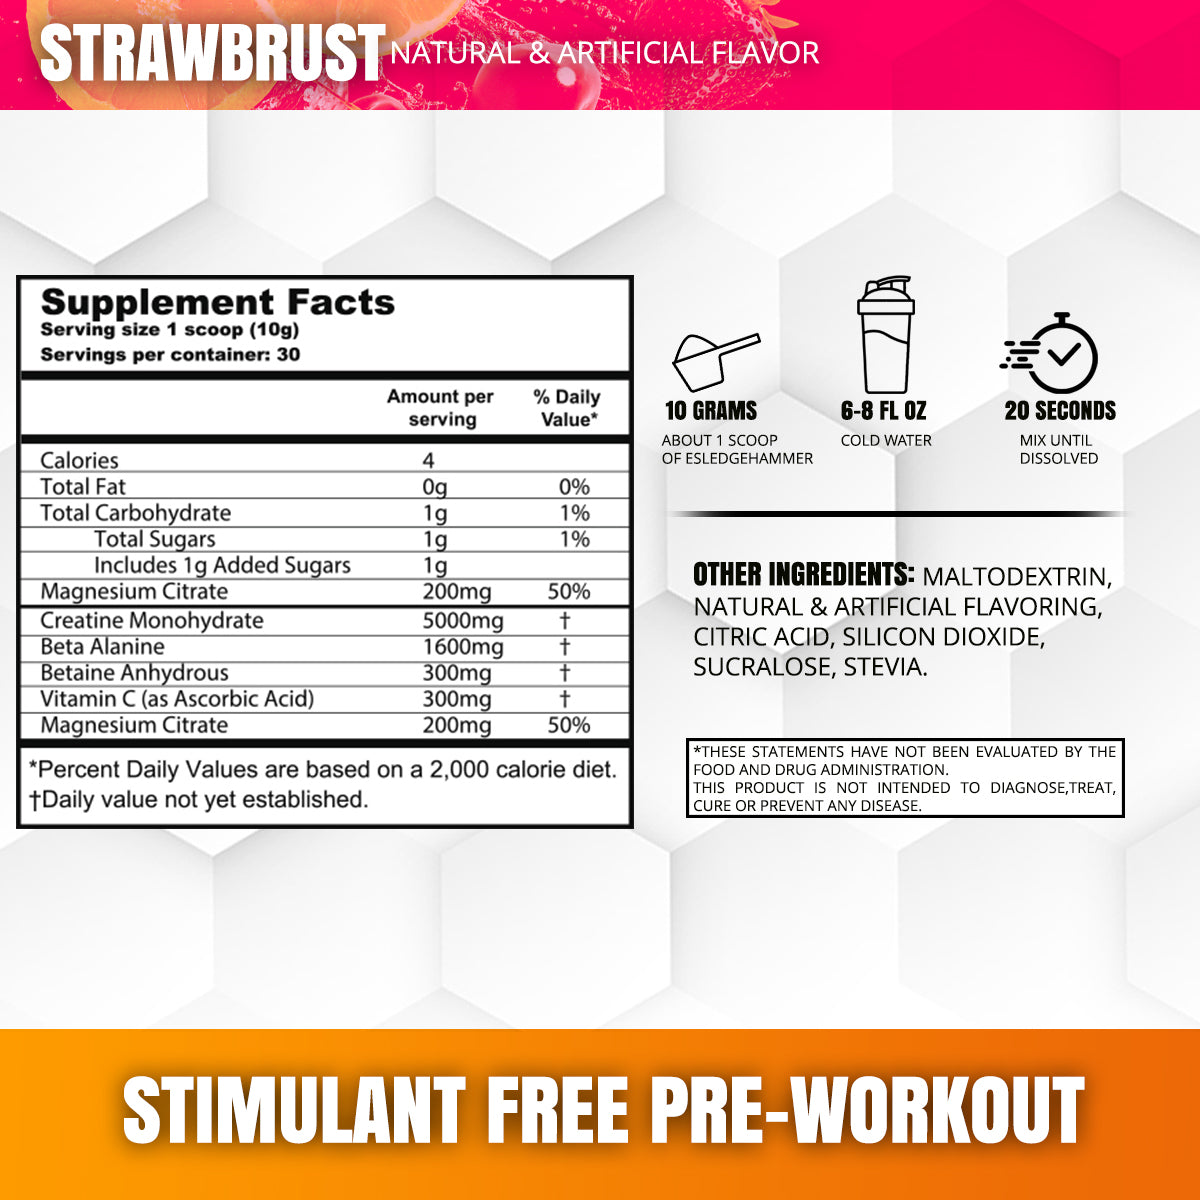 Category 5 - Stimulant Free PreWorkout